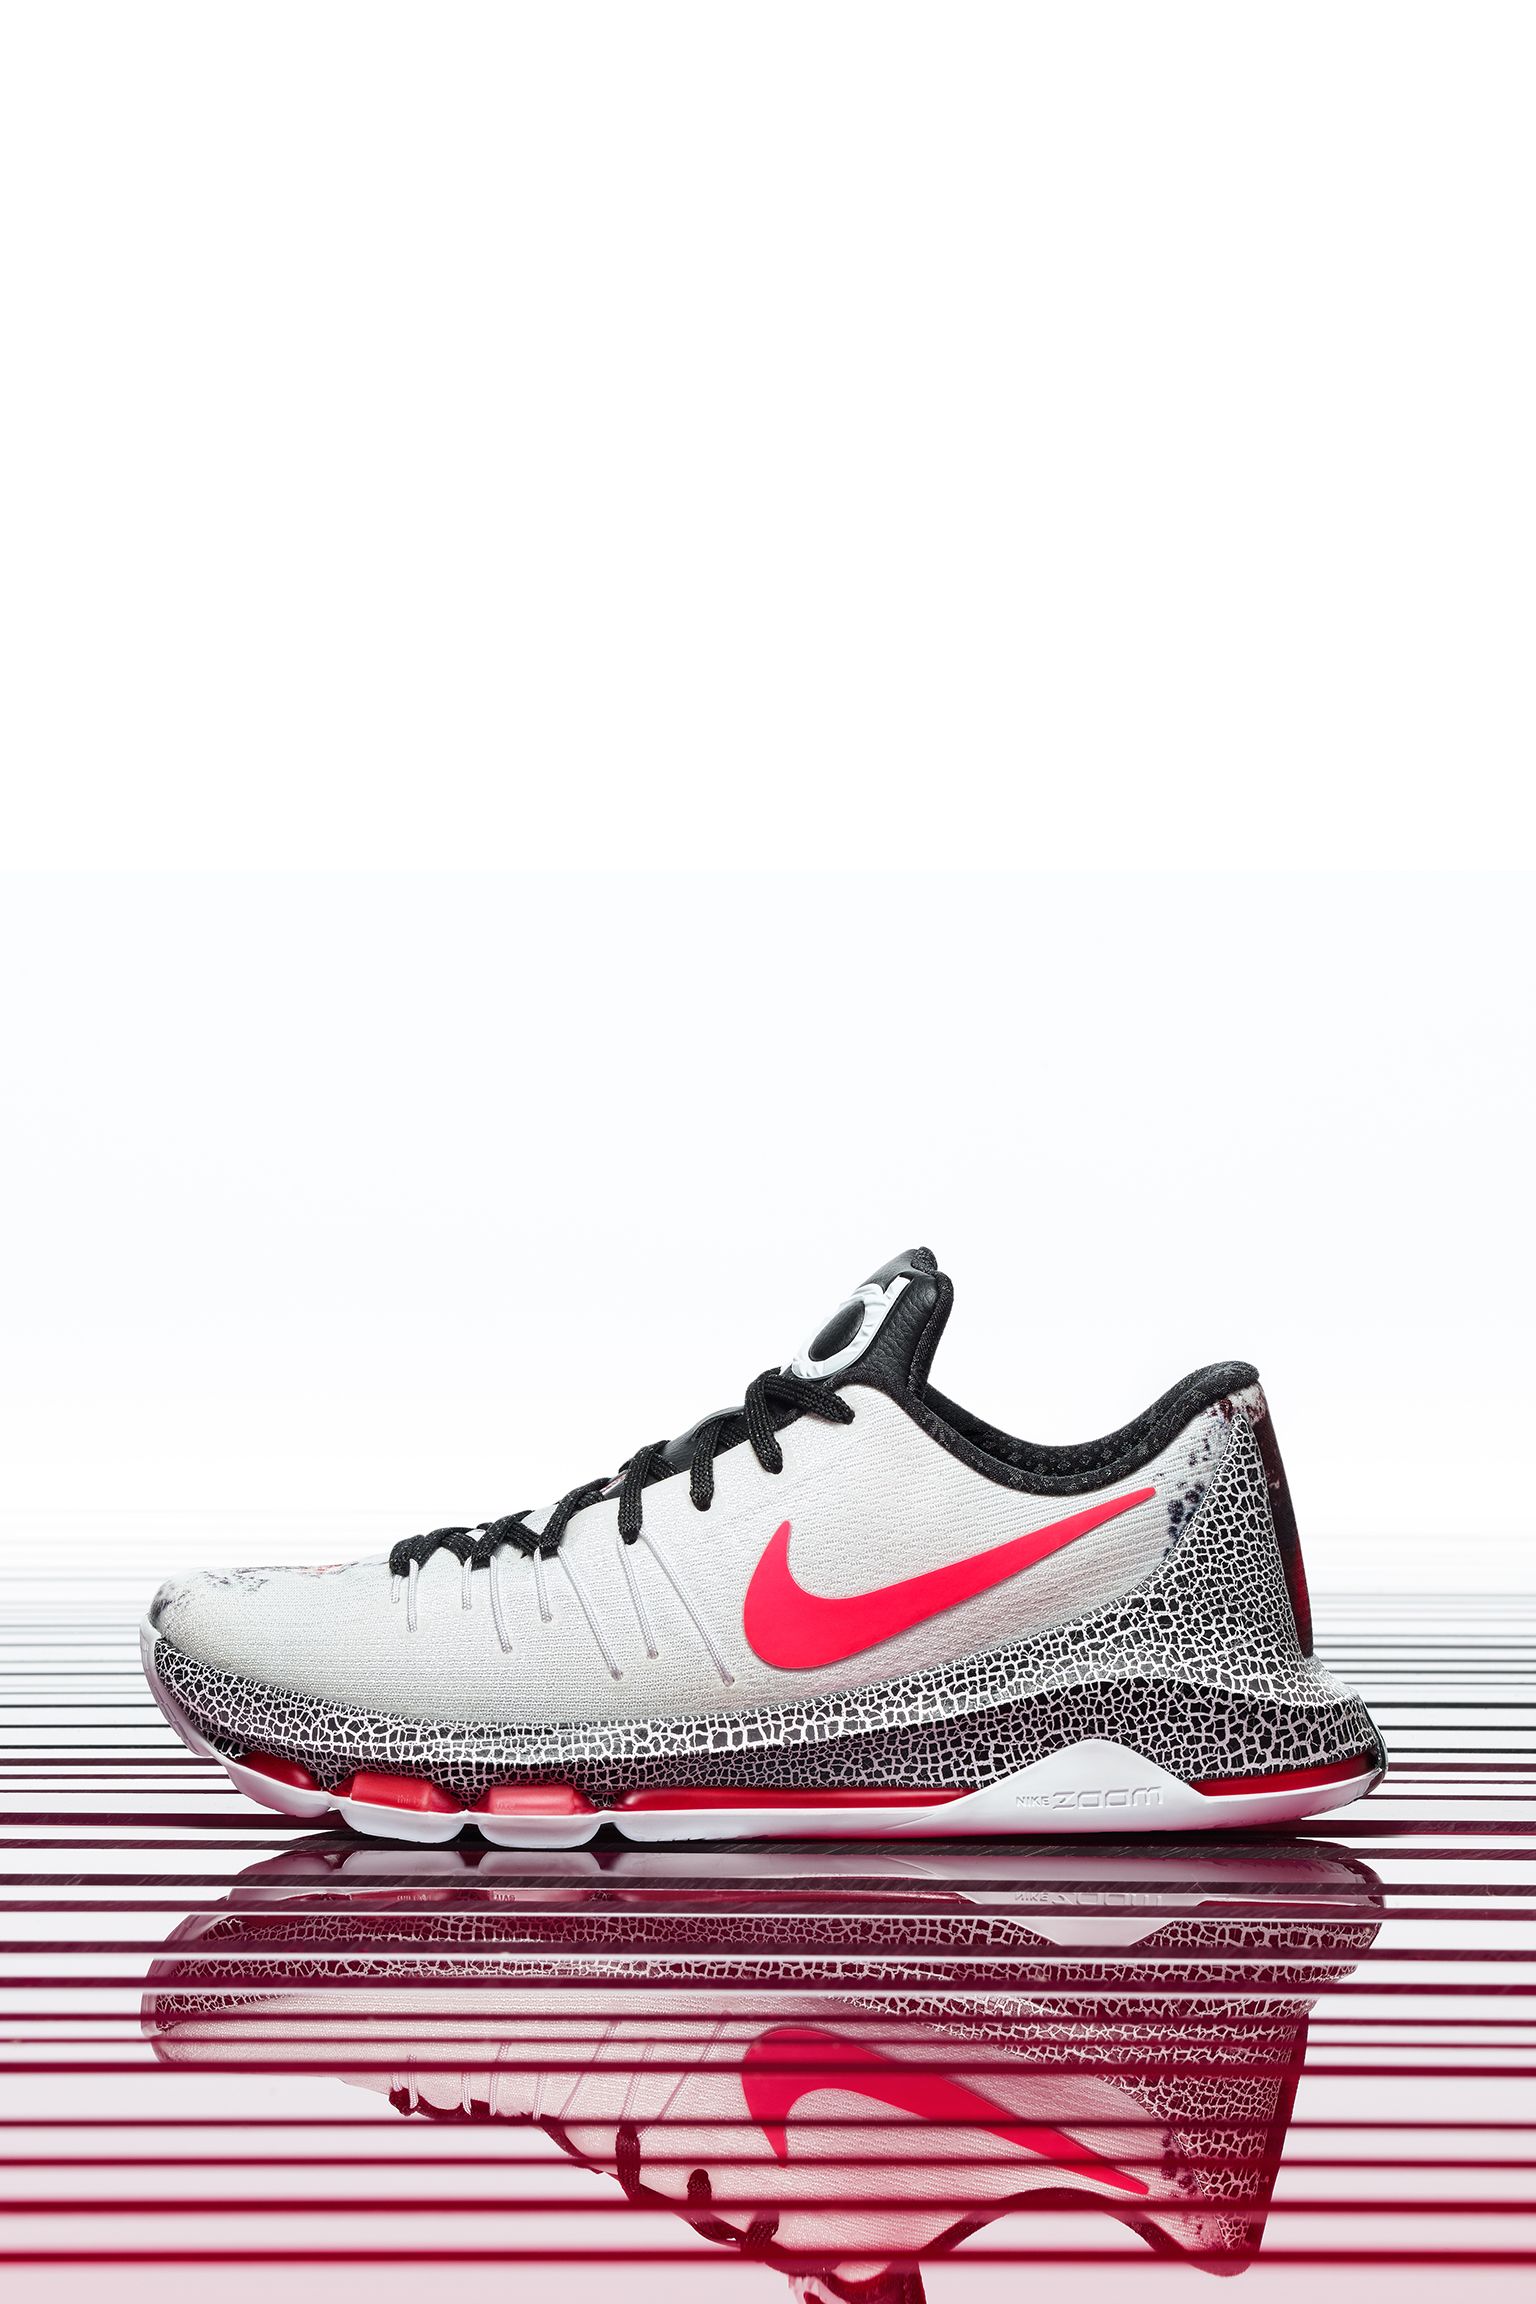 plato Apropiado relajarse Nike KD 8 'Fire & Ice' Release Date. Nike SNKRS